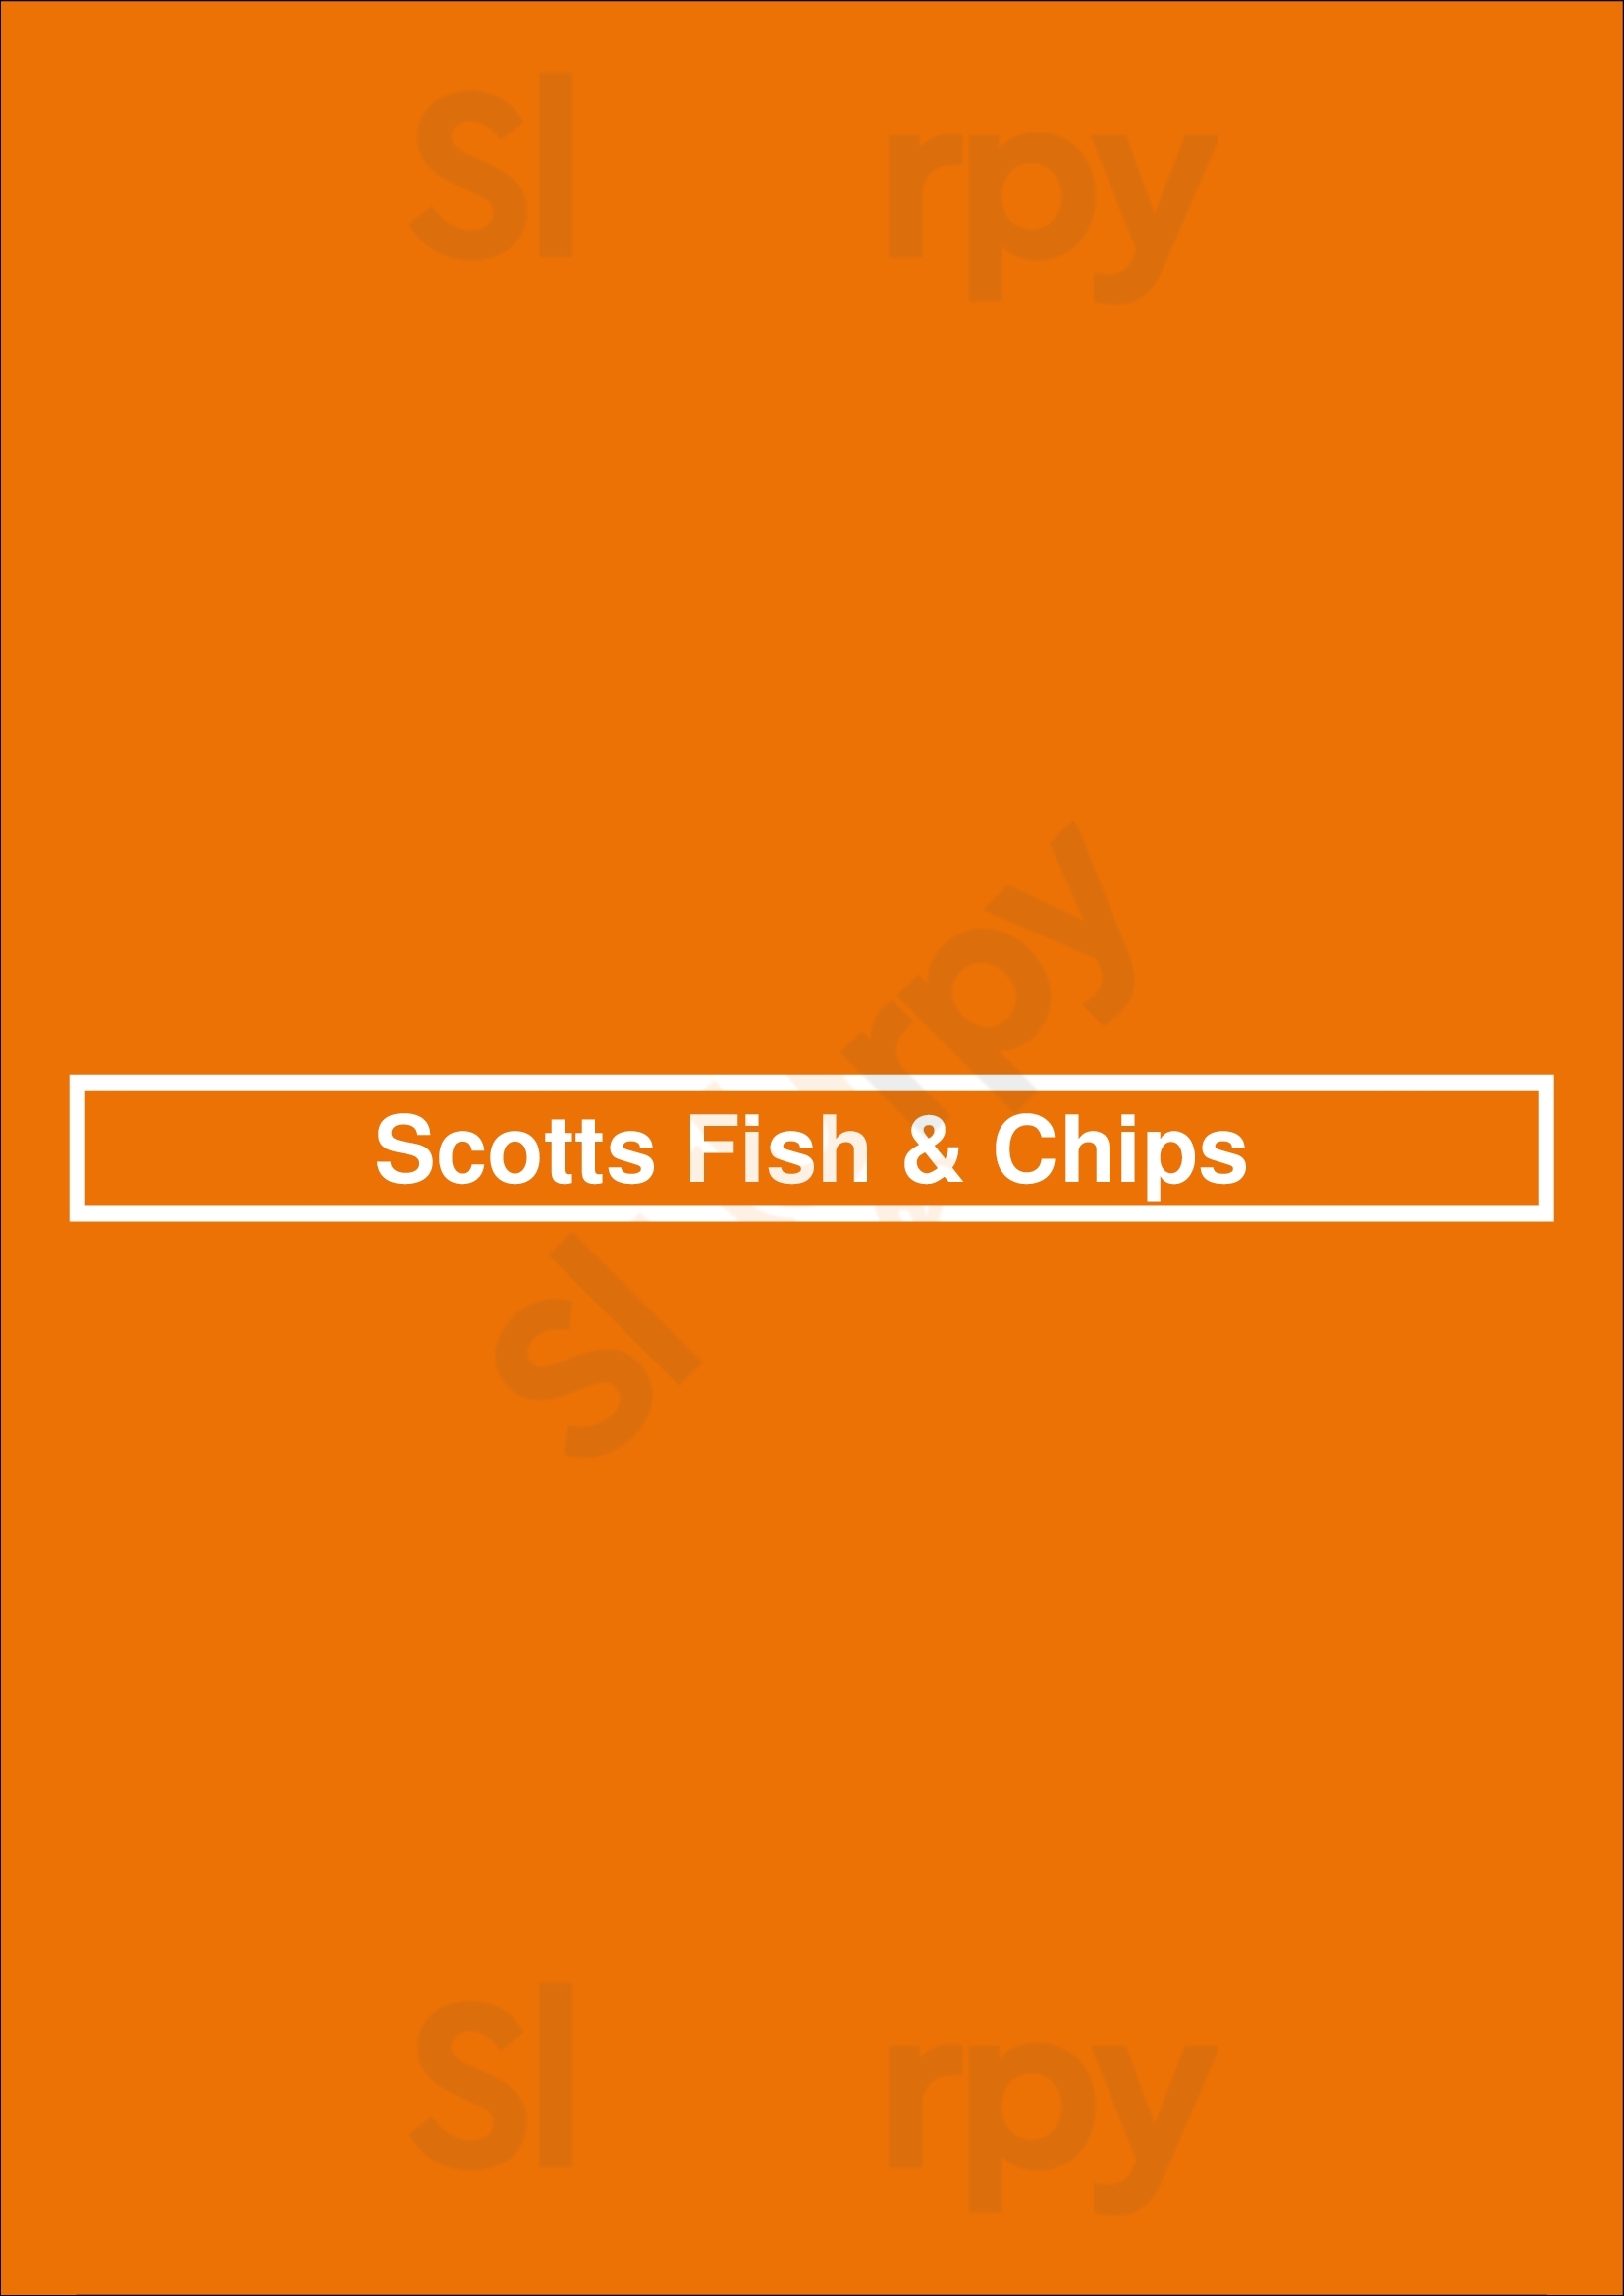 Scotts Fish & Chips Windsor Menu - 1